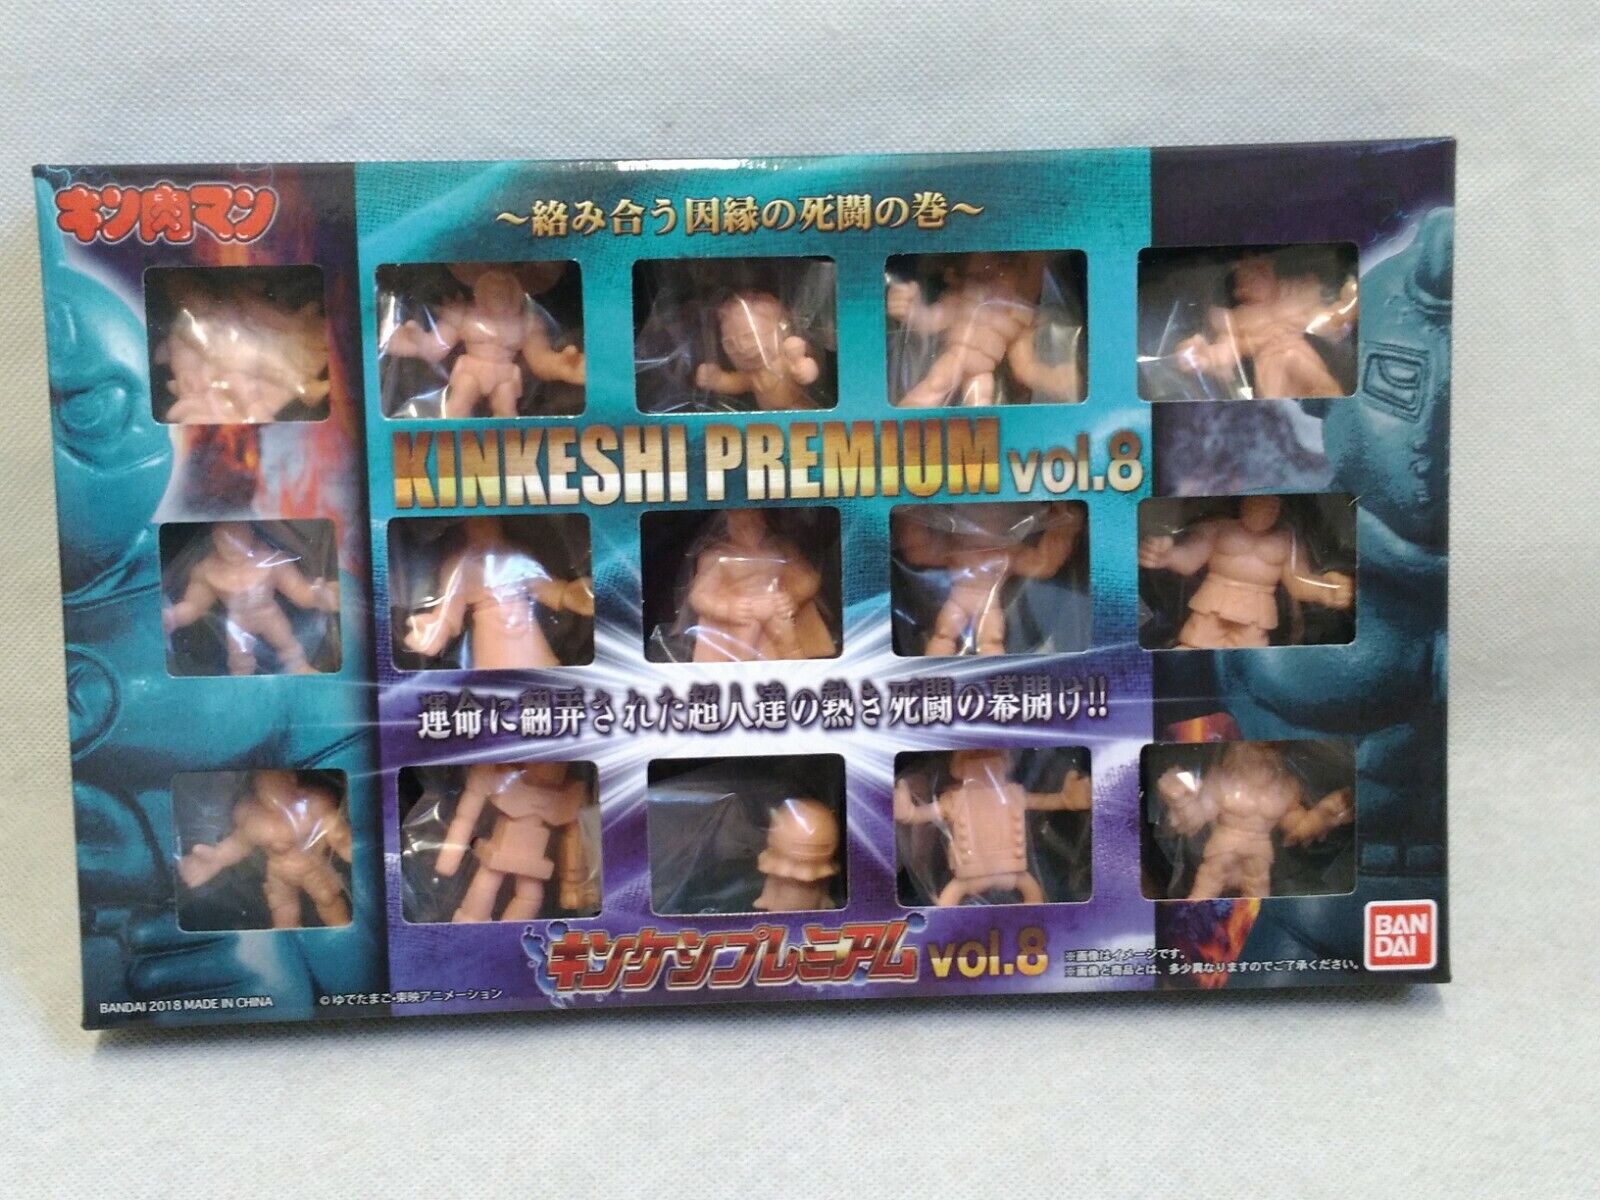 NEW Bandai Kinnikuman Kinkeshi Premium vol.8 PVC Figure 15 Pieces Set from Japan